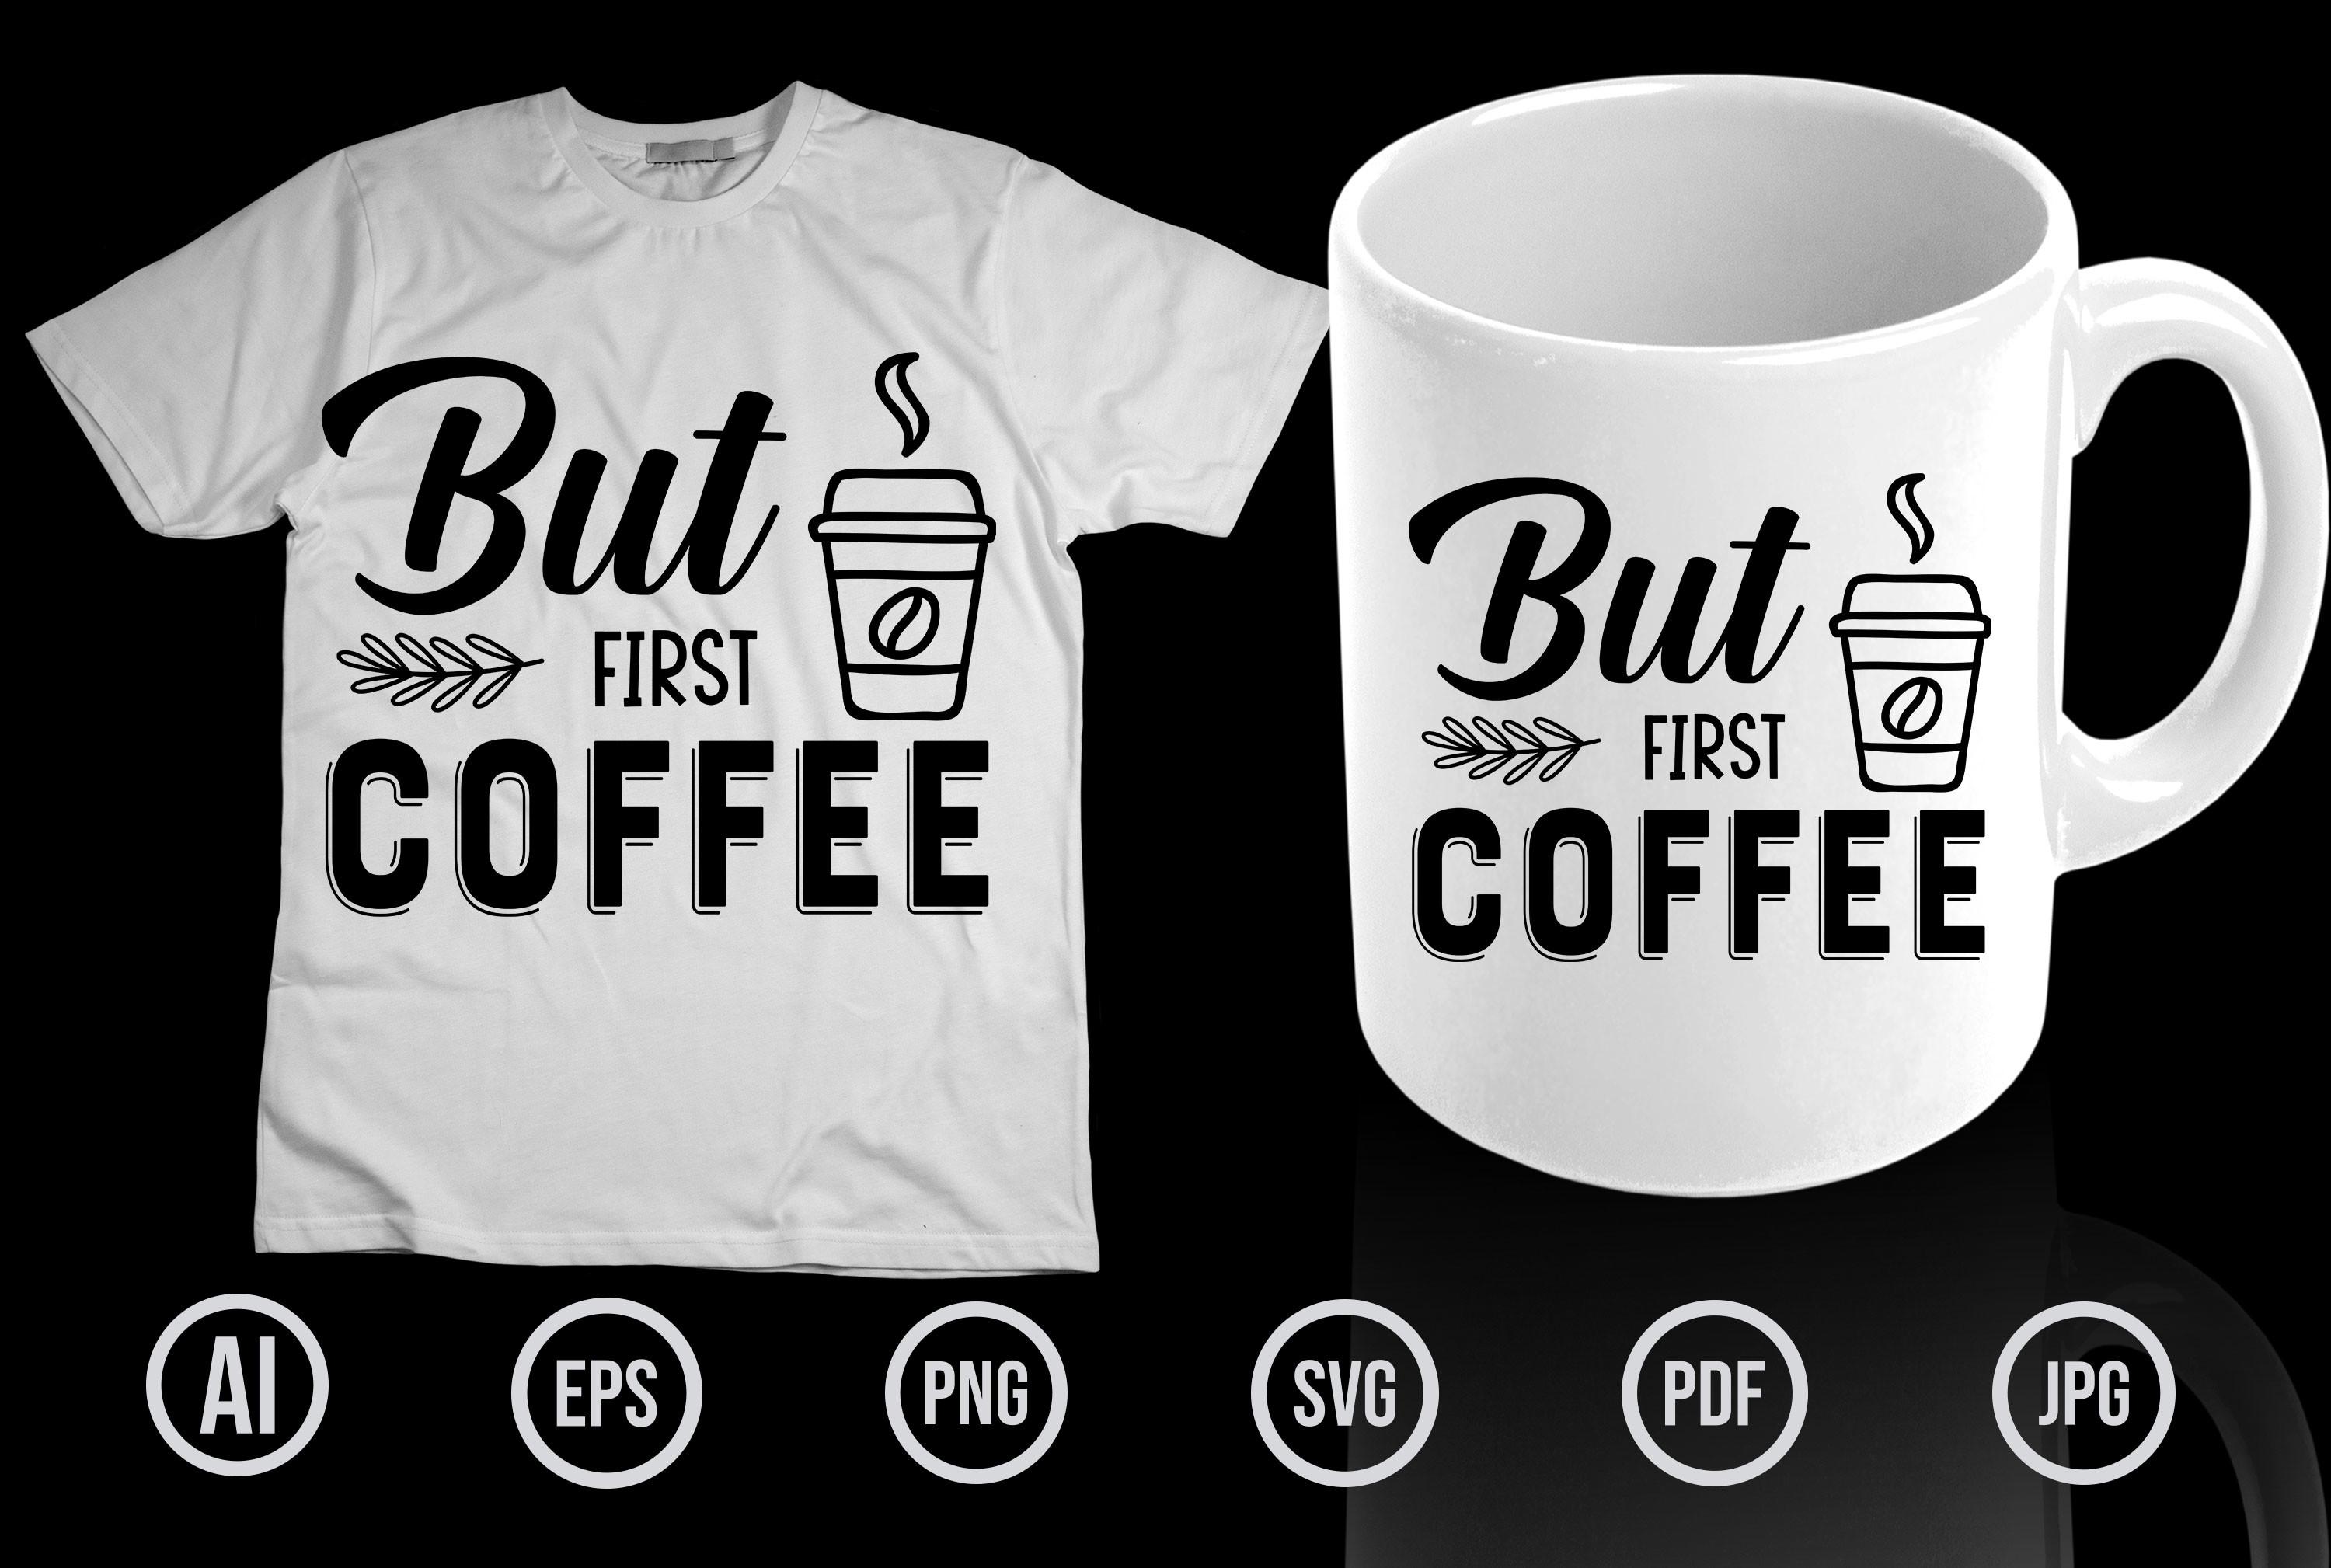 But-first-coffee-t-shirt-design